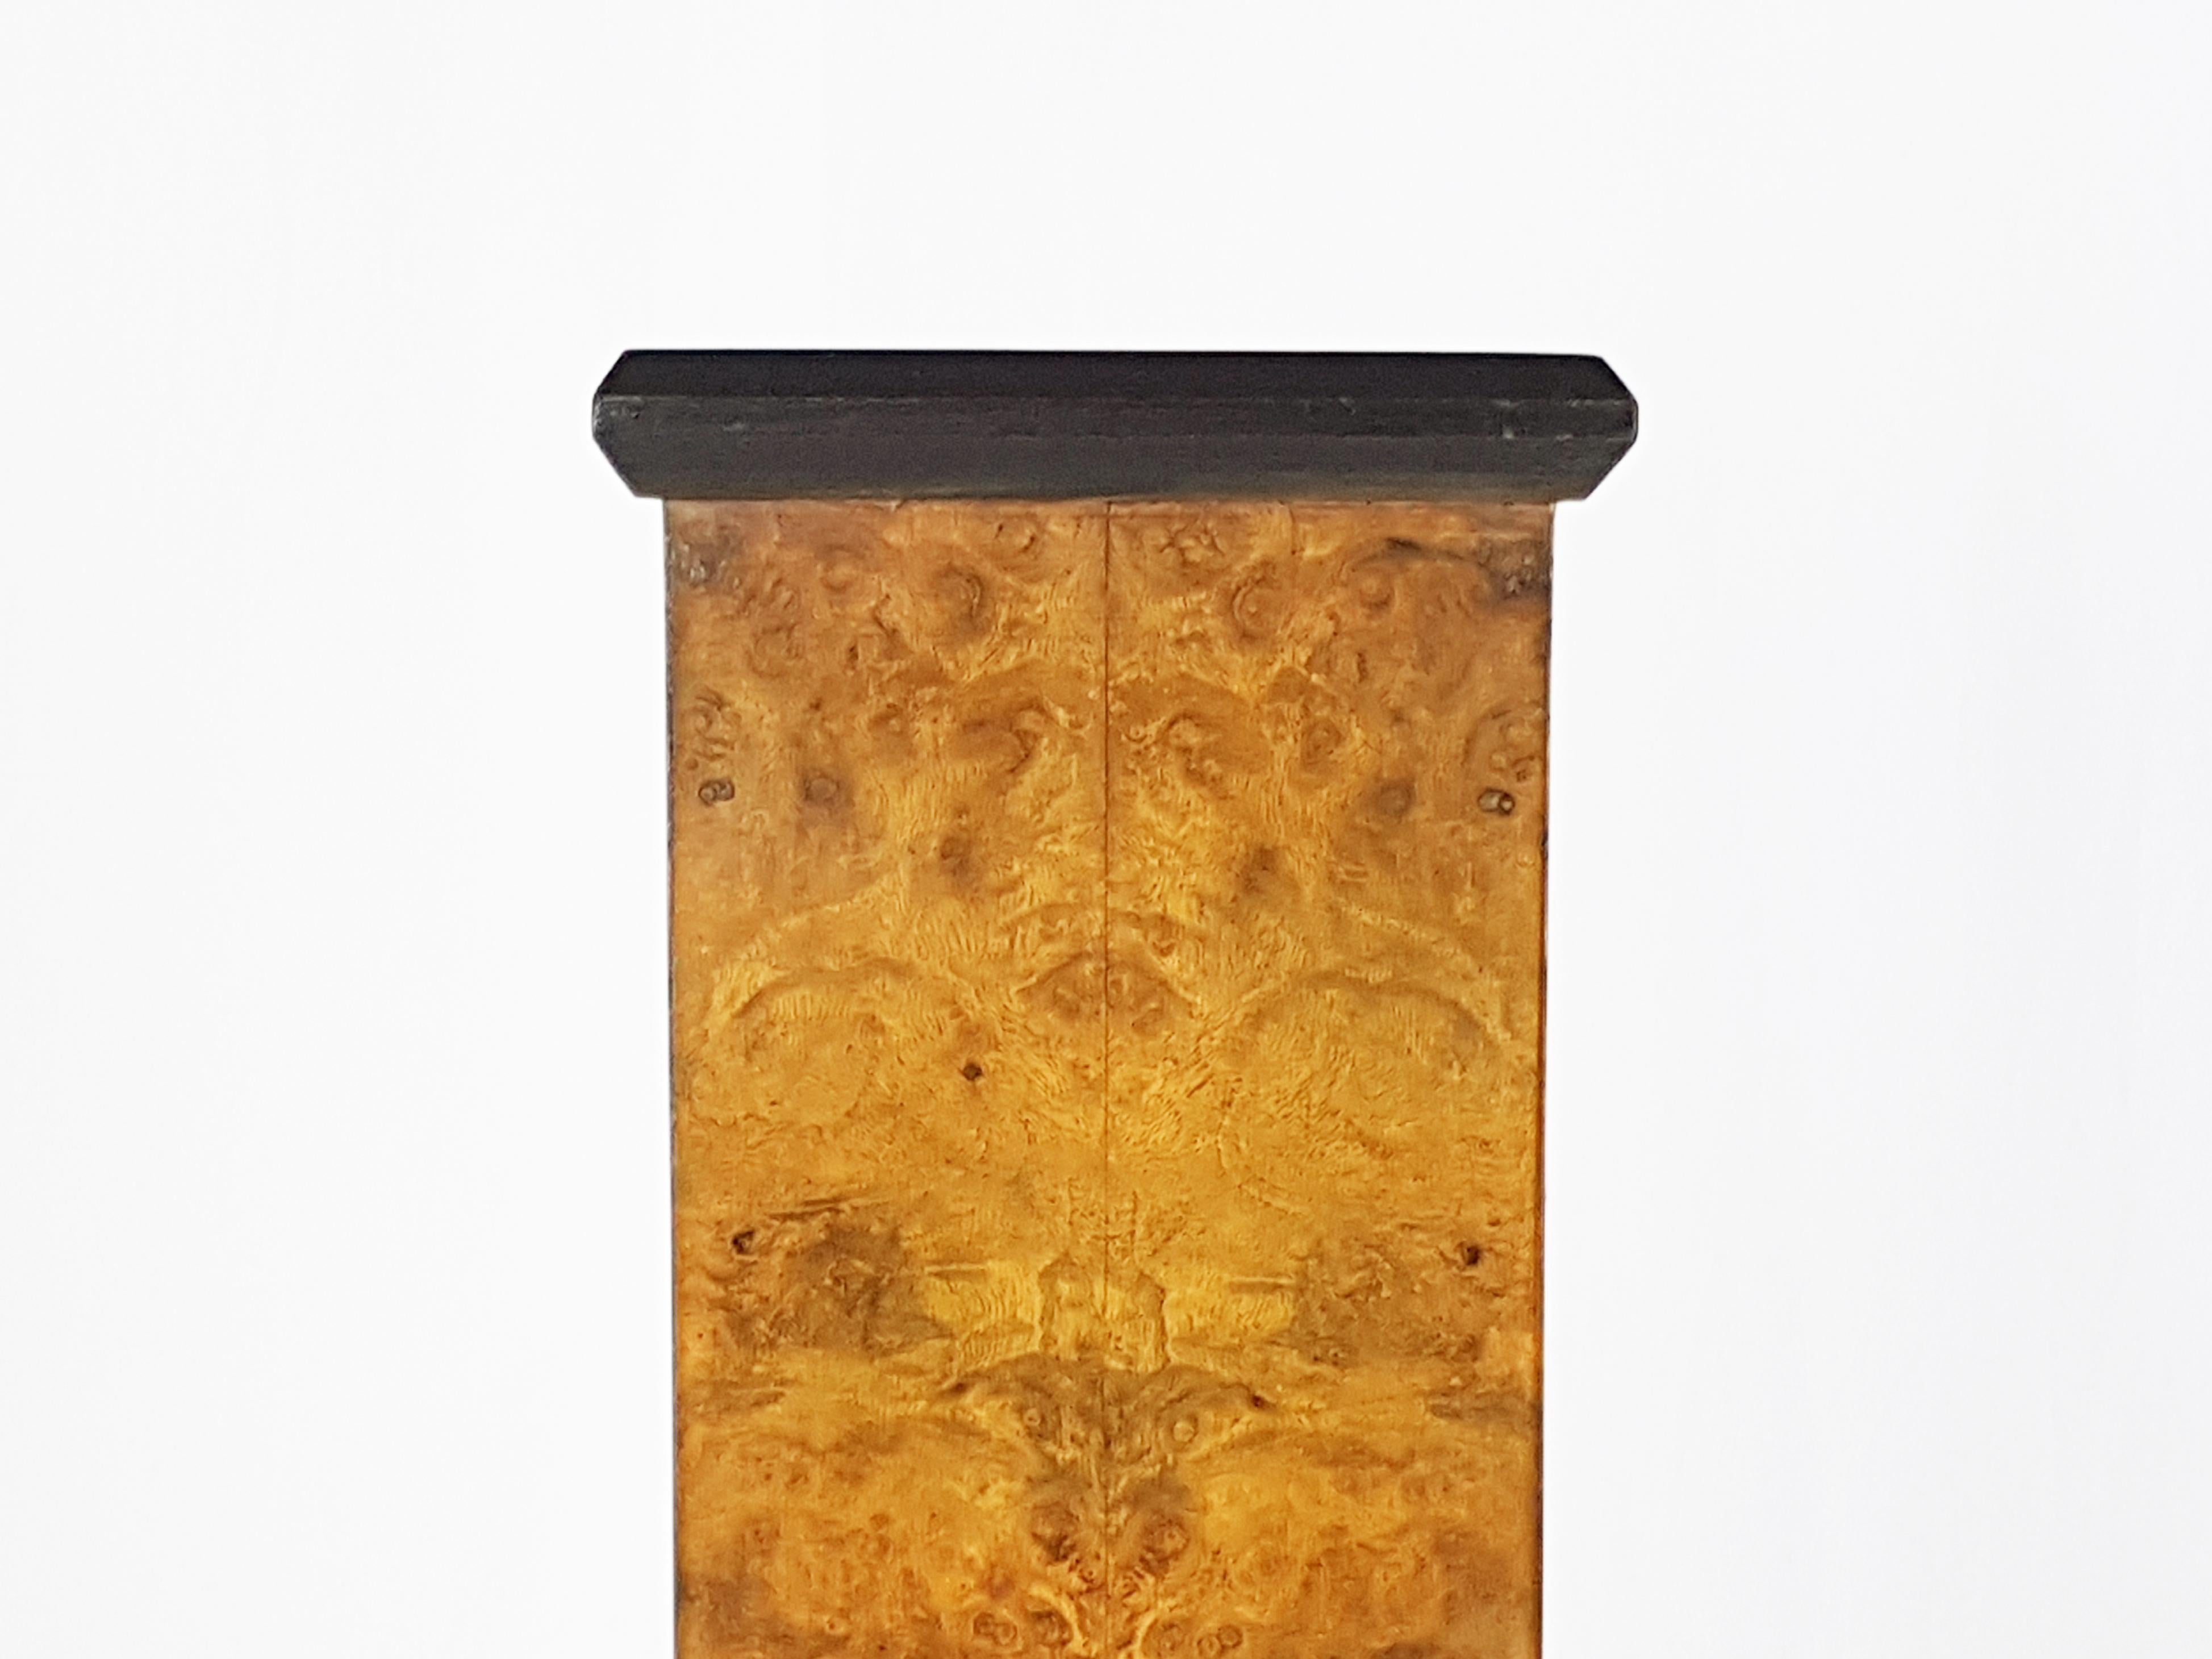 Veneer Italian Walnut Briar Root 1930s Pedestal with Shelves Attributed to Domus Nova